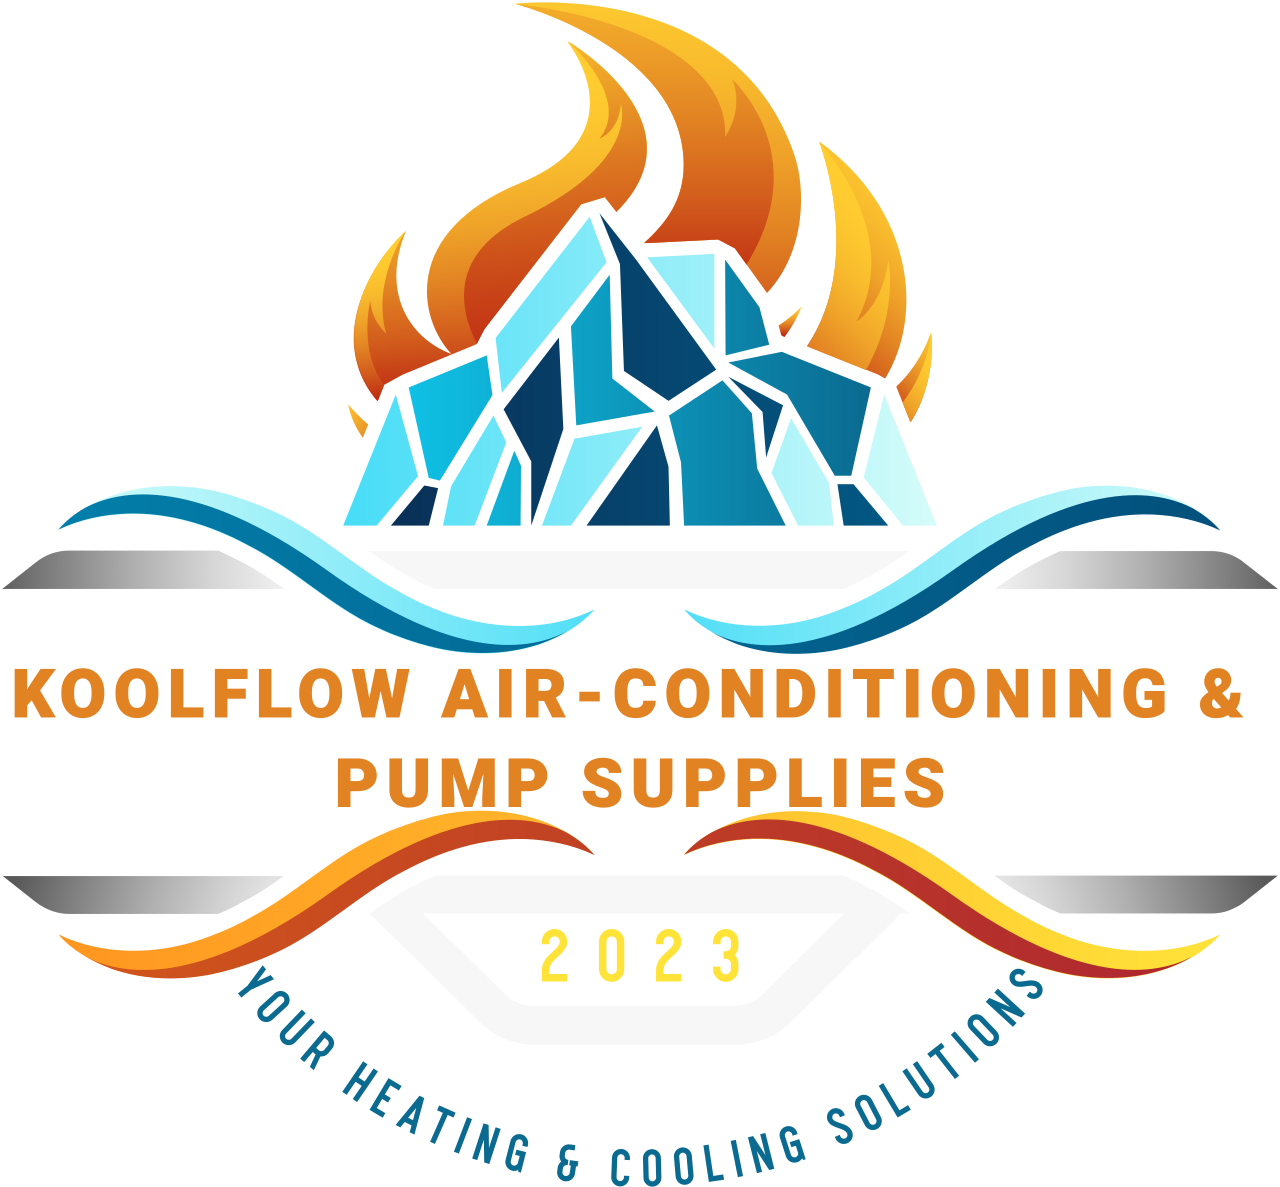 Koolflow Air-conditioning & 
Pump Supplies's logo